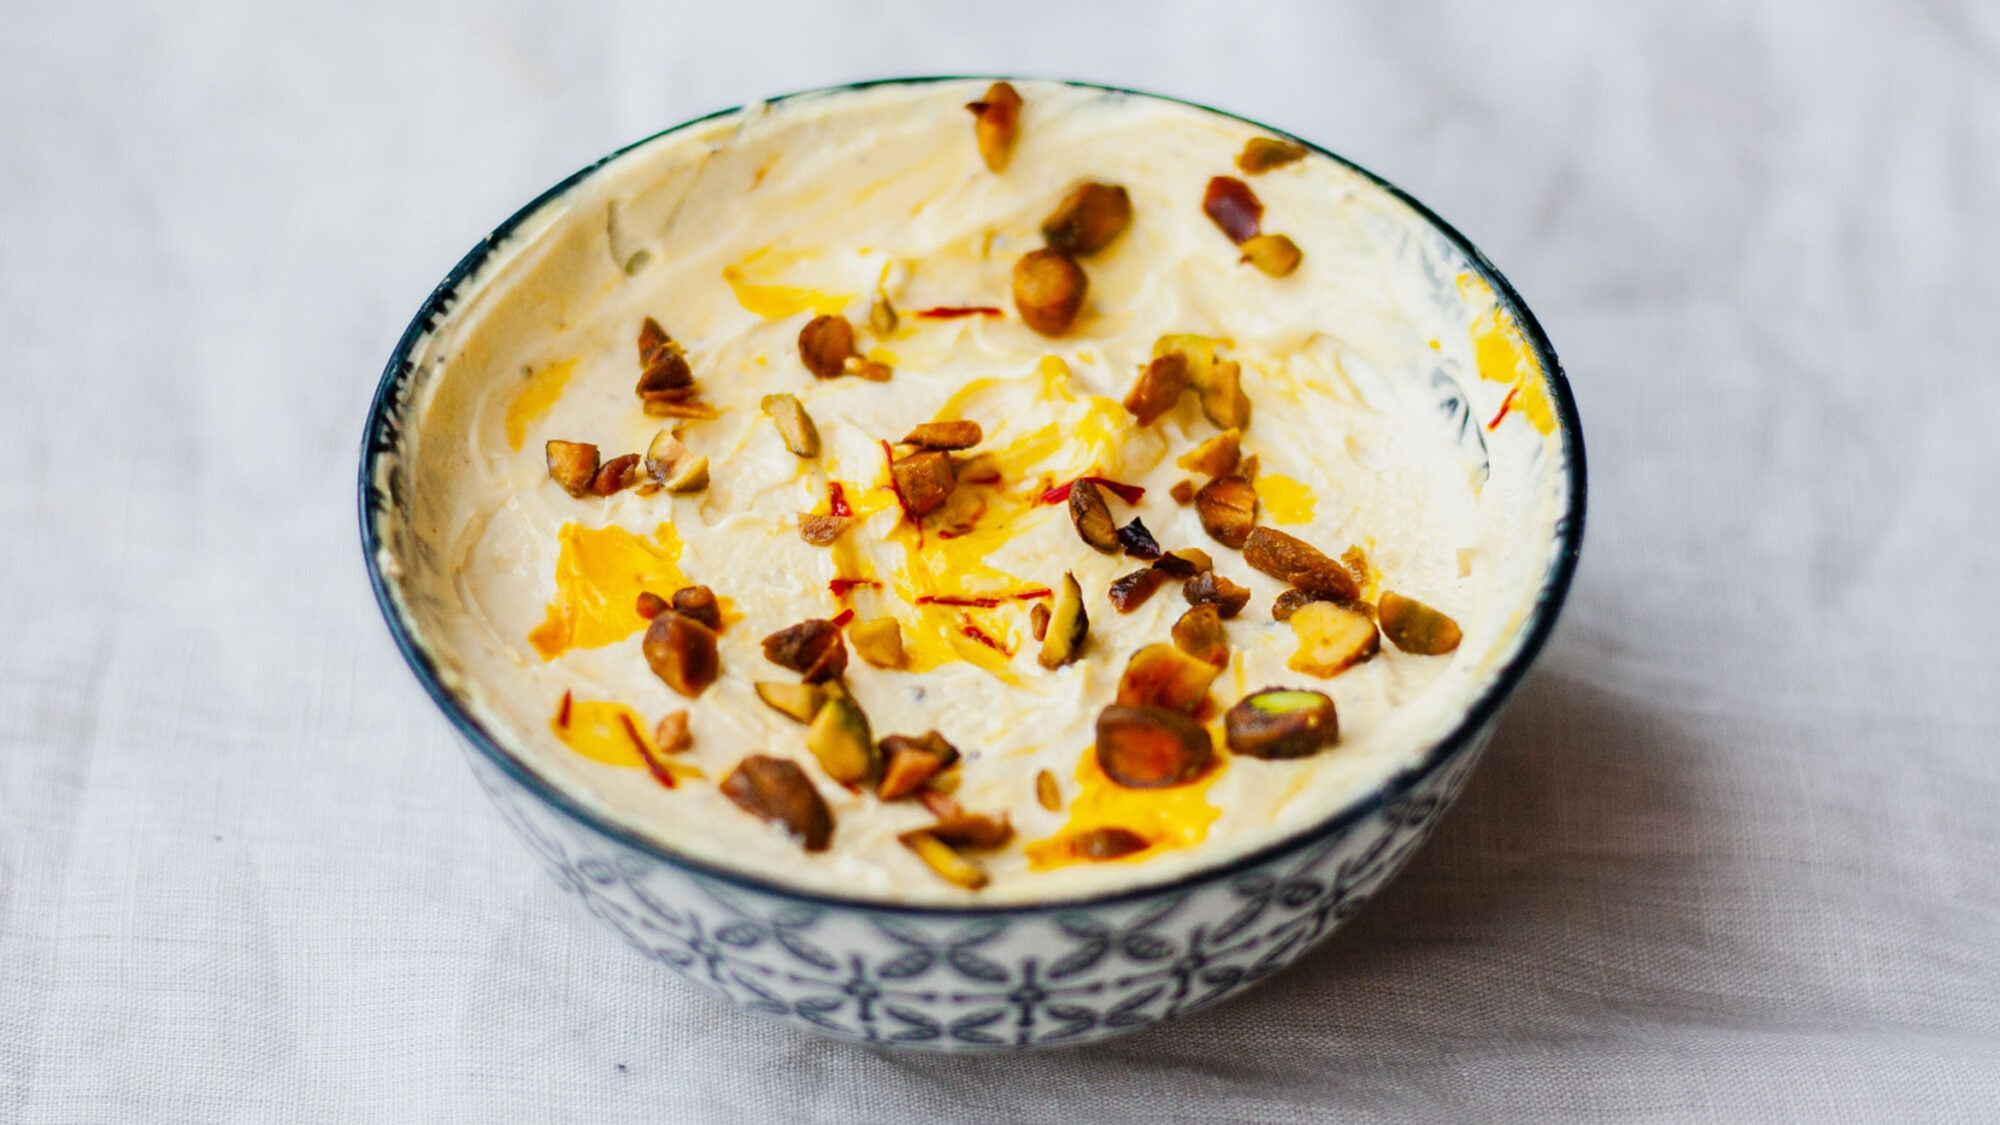 Article-Kesar-Pista-Saffron-and-Pistachio-Shrikhand-indian-Yogurt-Dessert-Recipe